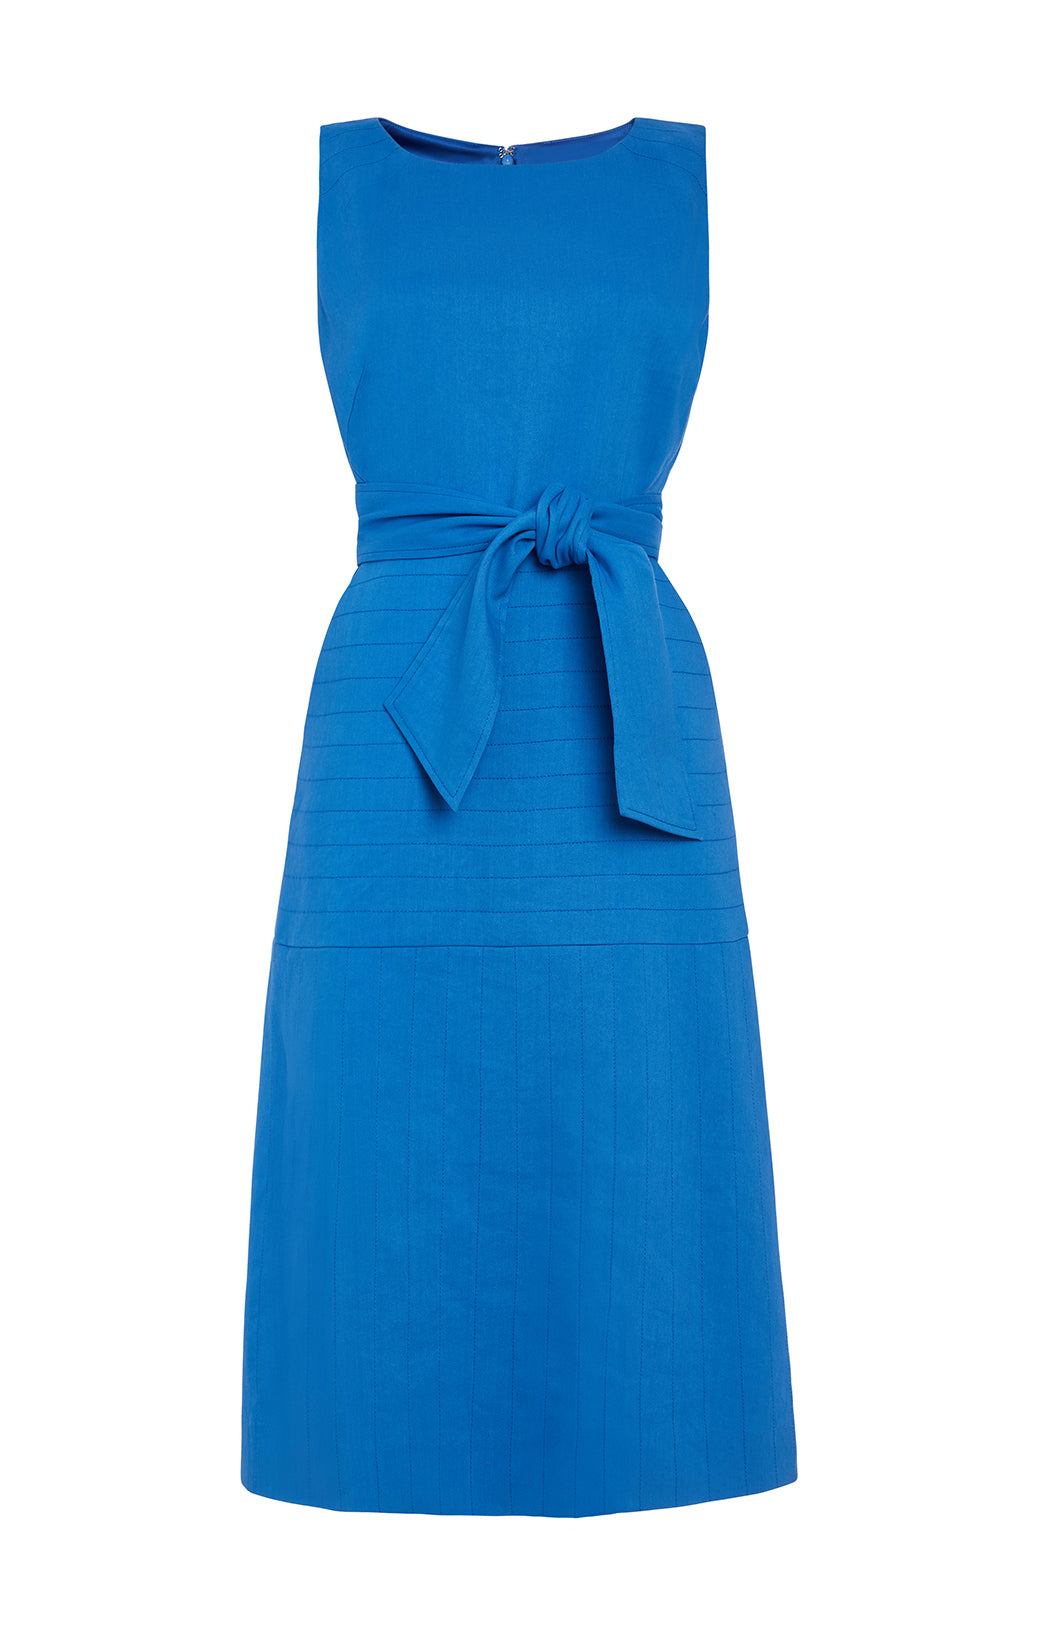 Rambutan - Italian Stretch Jacquard Dress - Product Image